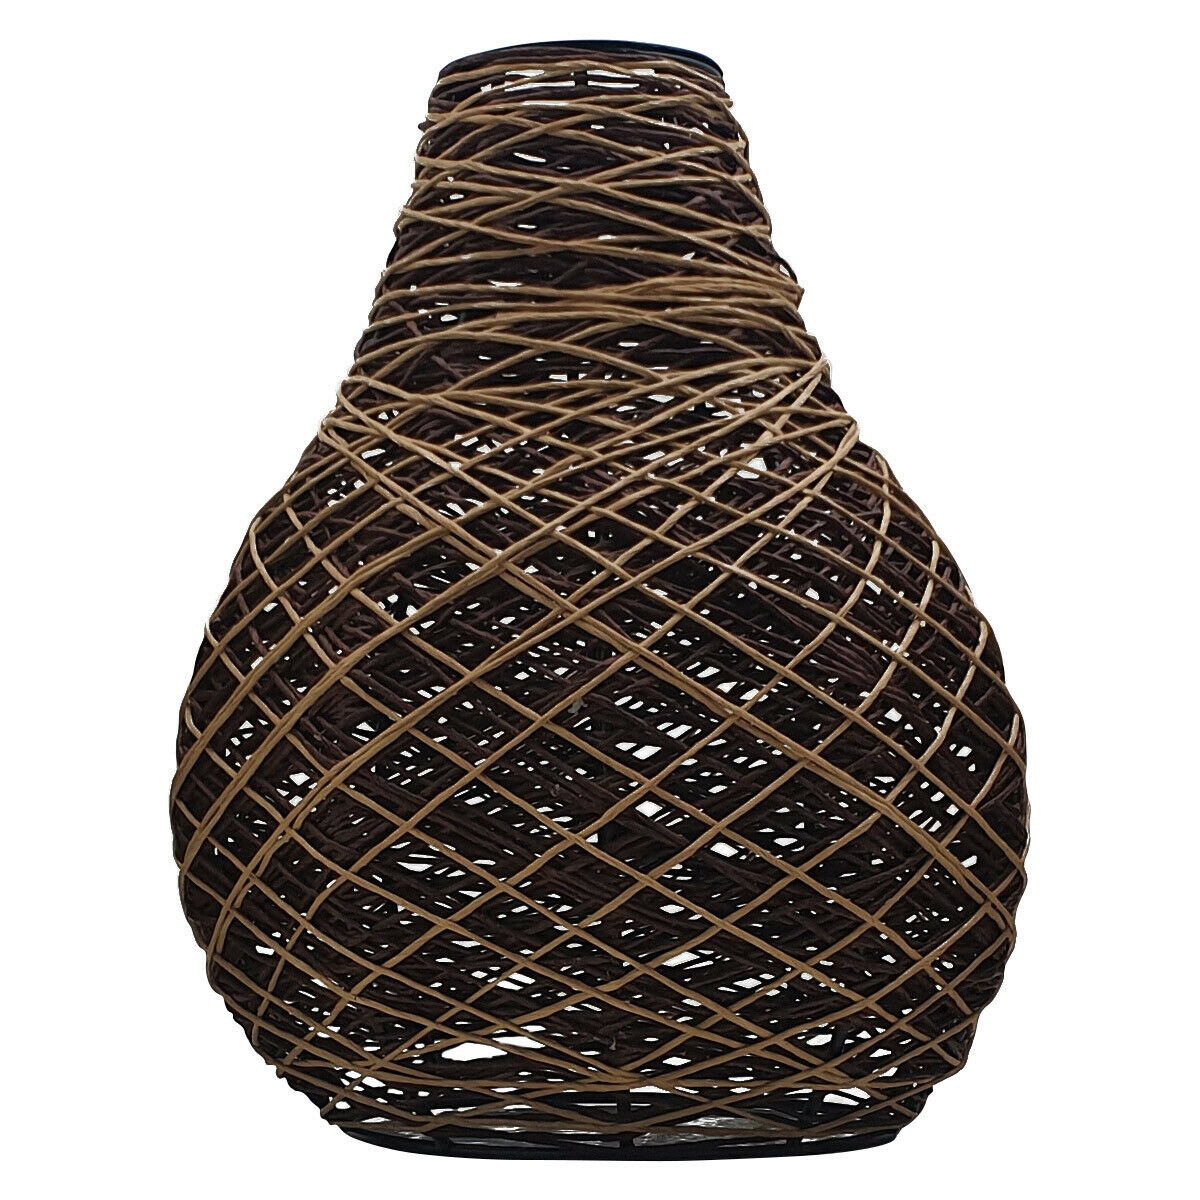 Decorative Modern Woven Rattan Pendant Lamp Cage Lighting Shade